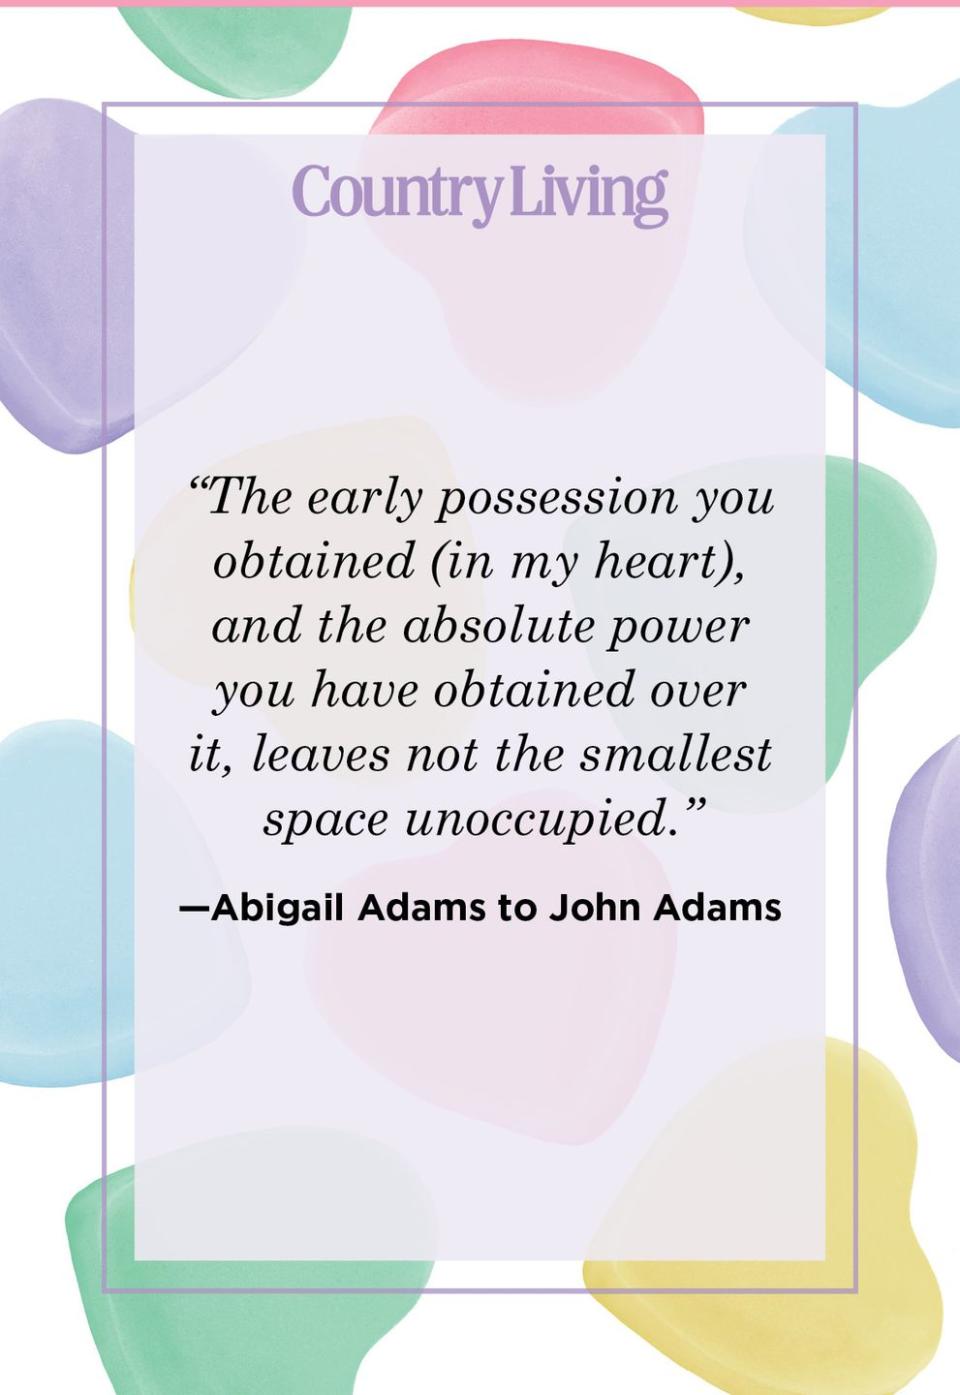 Abigail Adams (to John Adams)